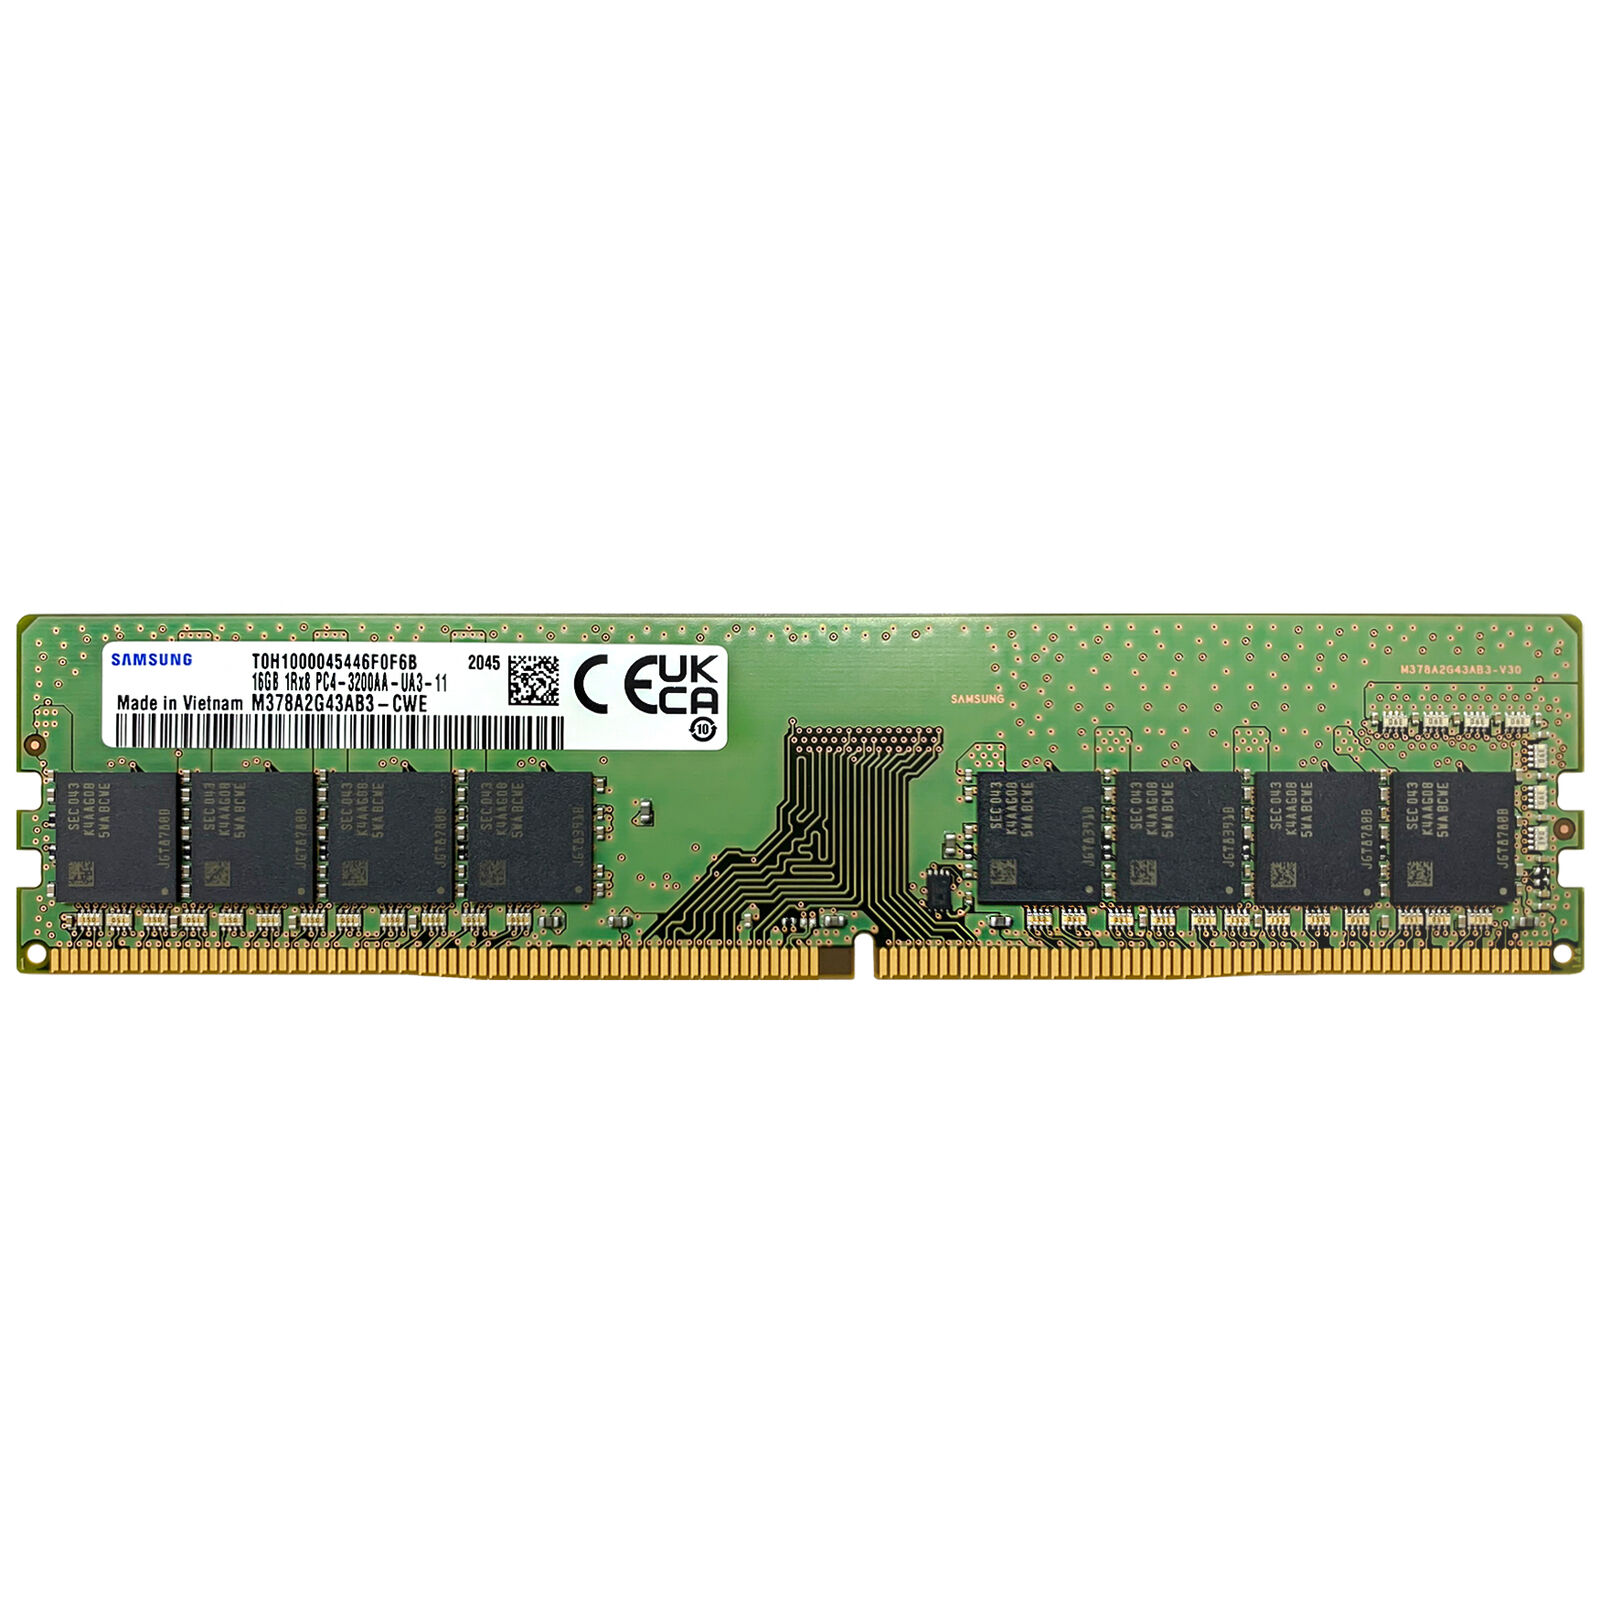 Samsung 16GB DDR4 3200 MHz PC4-25600 DIMM Desktop Memory RAM (M378A2G43AB3-CWE)